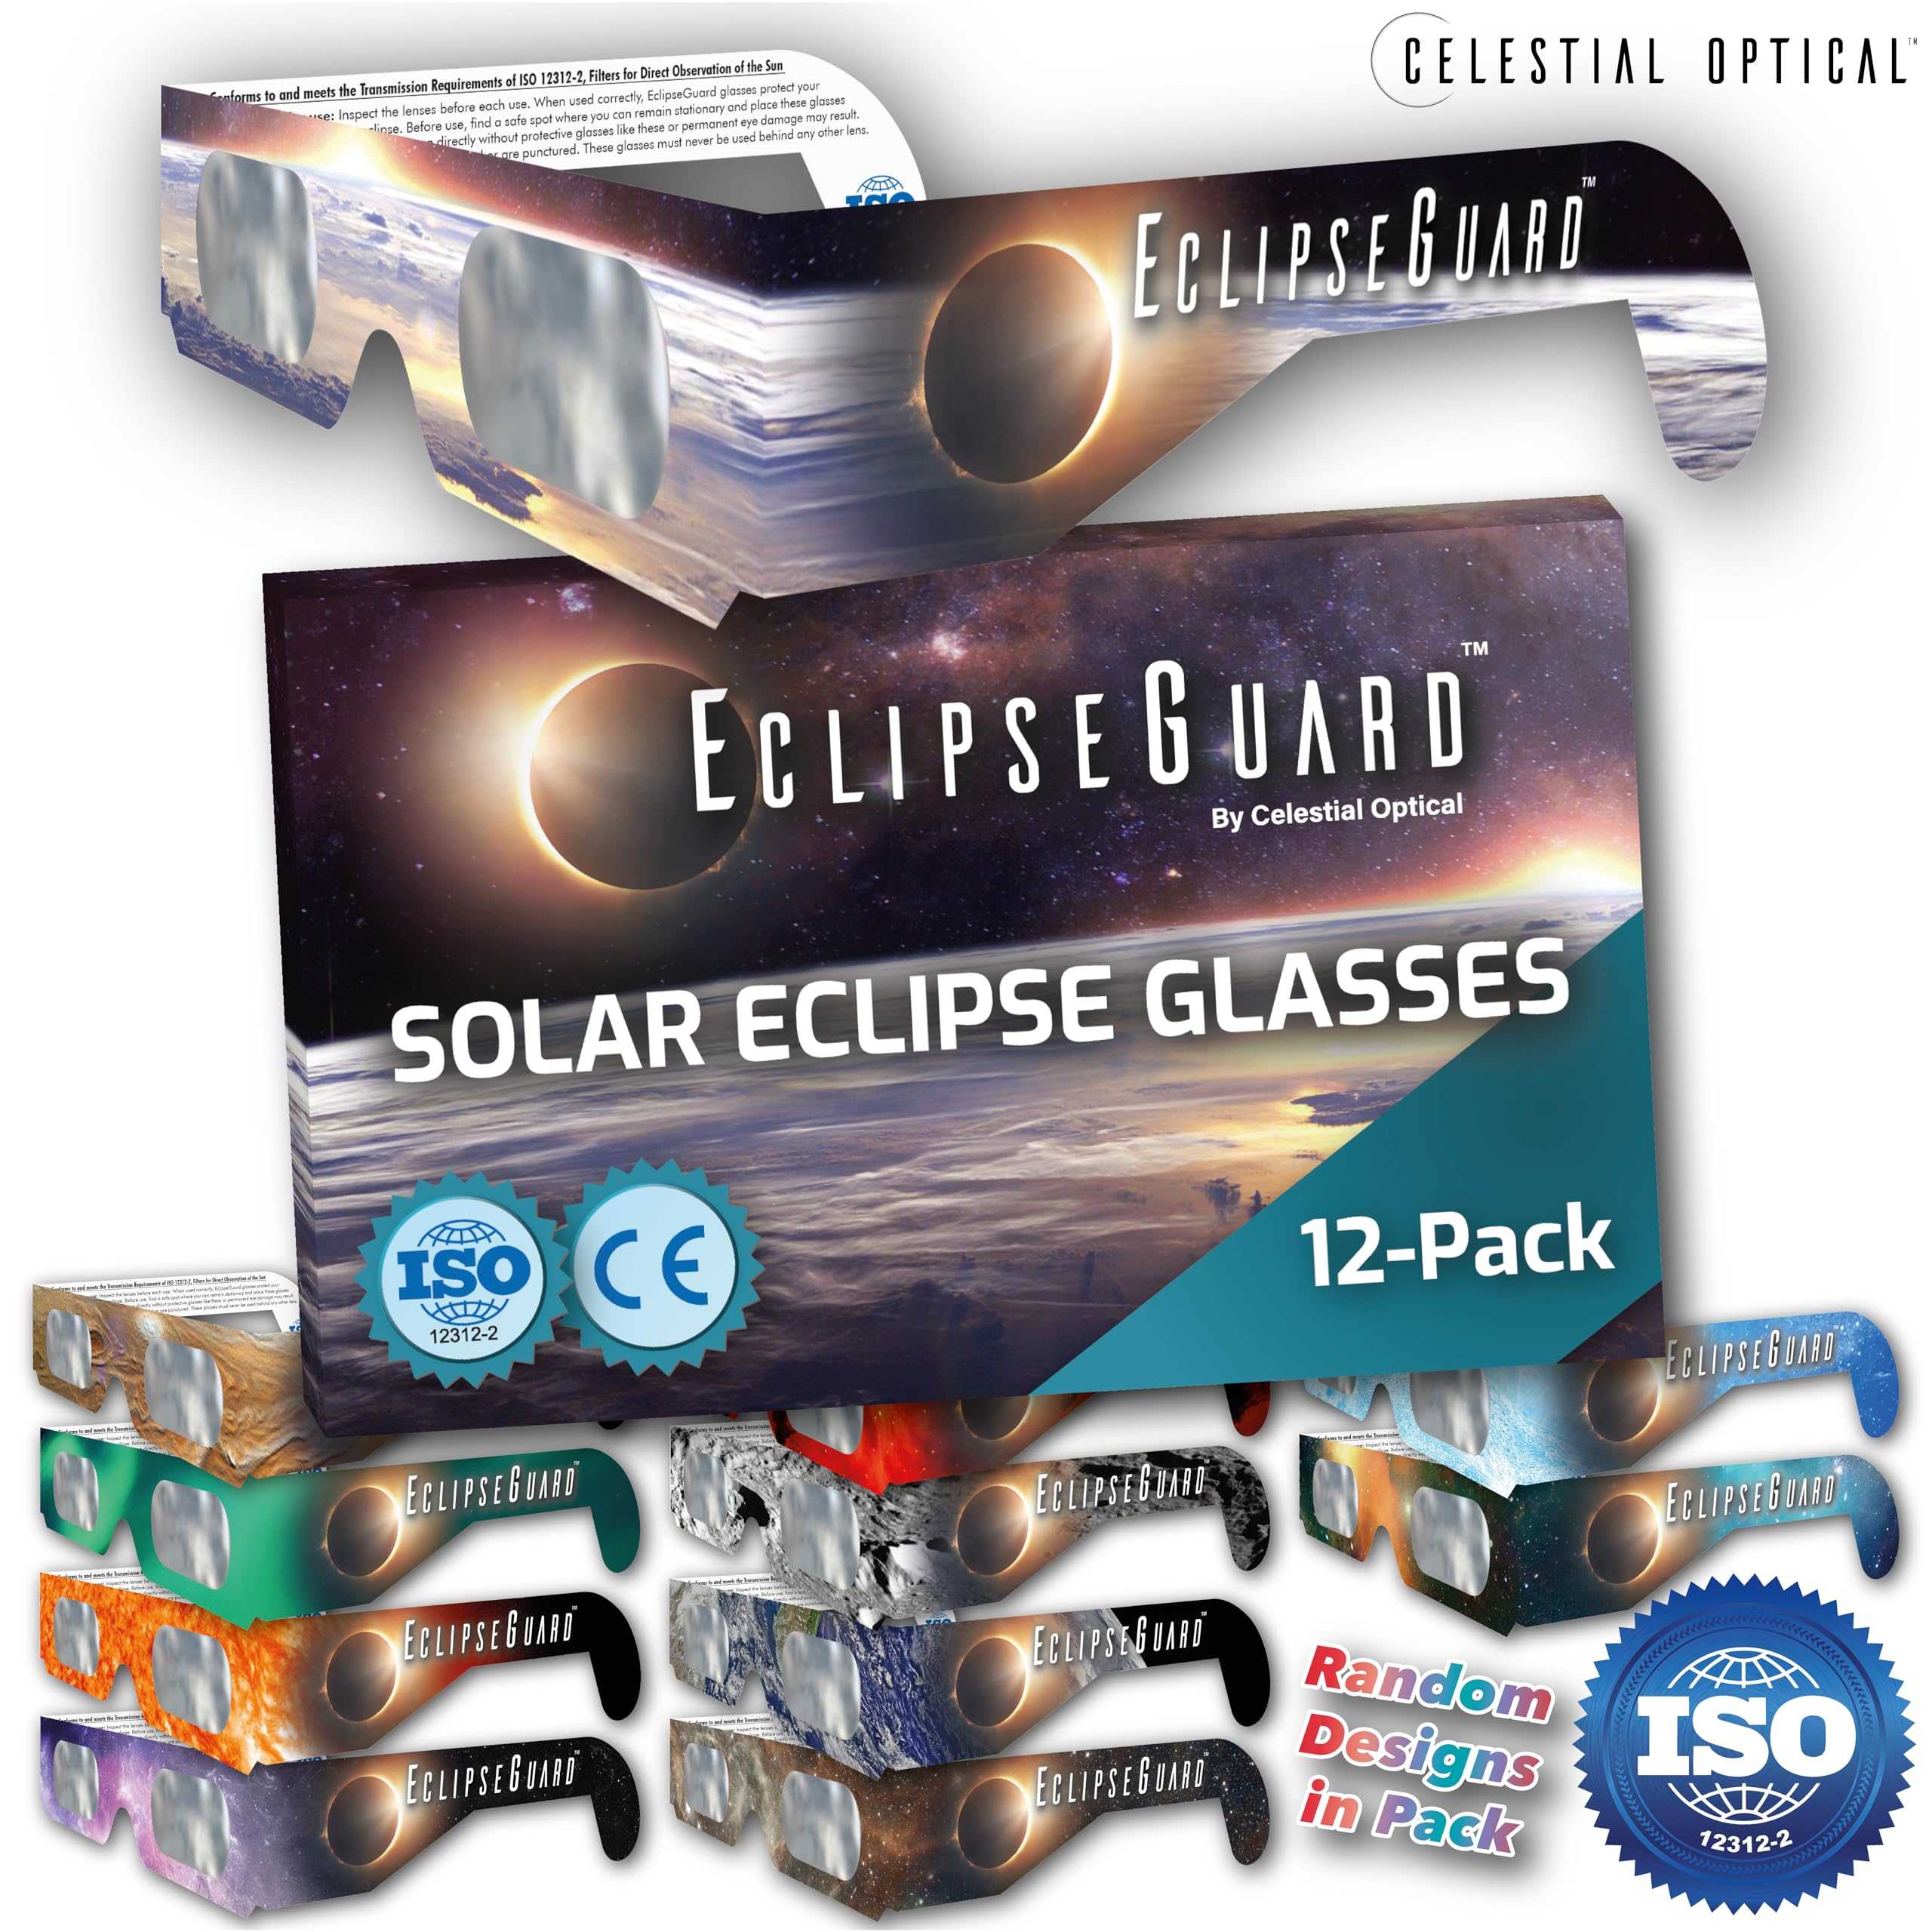 EclipseGuard Celestial Optical (12 Pack): Premium eclipse viewing glasses